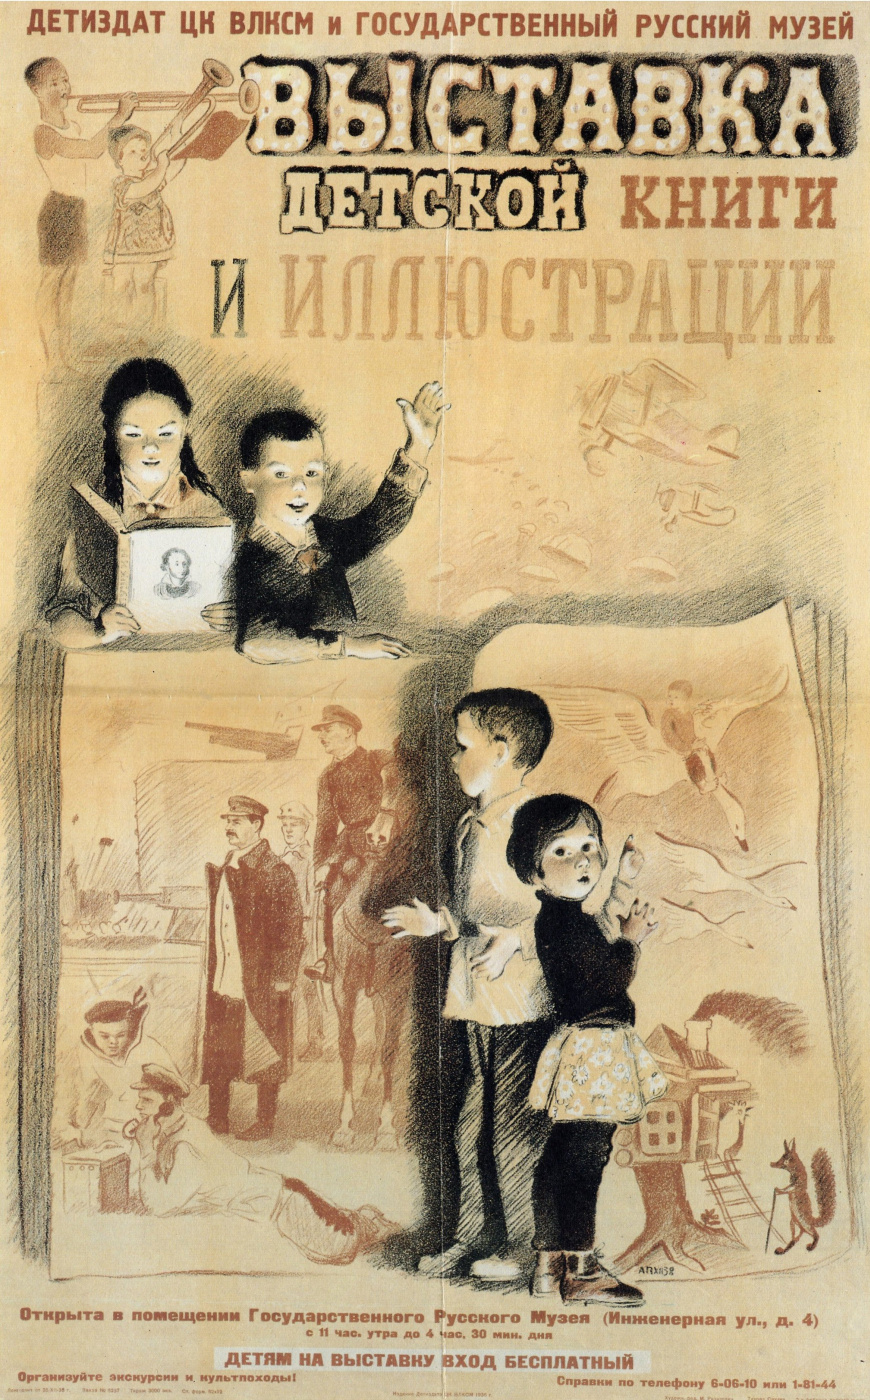 Alexey Fedorovich Pakhomov. 儿童书籍和插图展览。在俄罗斯国家博物馆开放